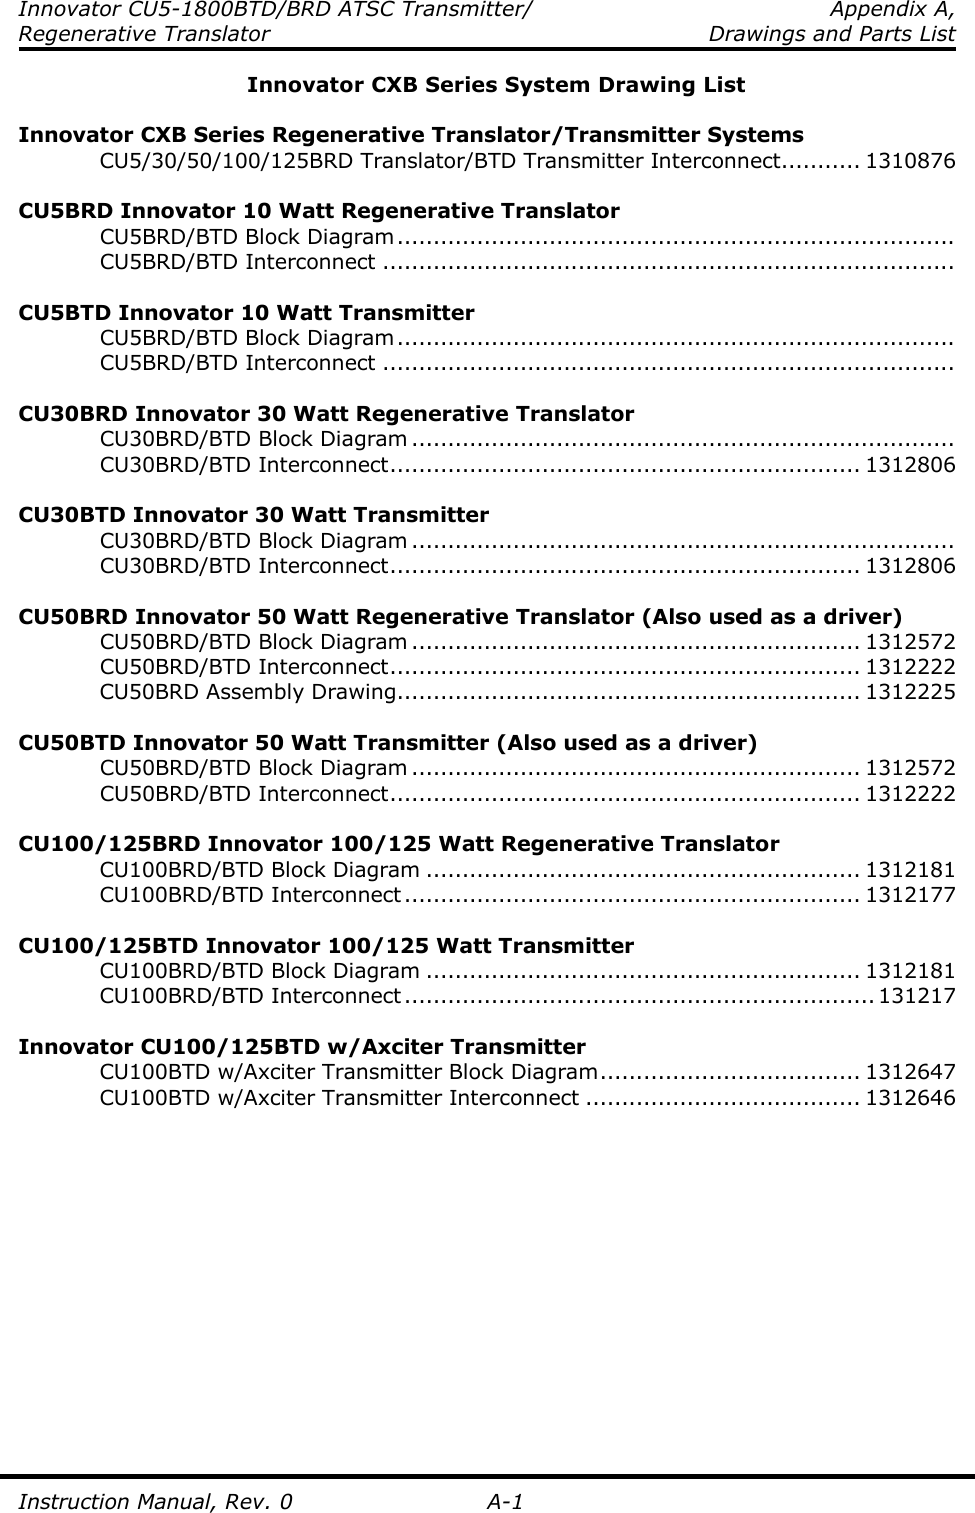 Innovator CU5-1800BTD/BRD ATSC Transmitter/  Appendix A, Regenerative Translator    Drawings and Parts List  Instruction Manual, Rev. 0  A-1 Innovator CXB Series System Drawing List  Innovator CXB Series Regenerative Translator/Transmitter Systems     CU5/30/50/100/125BRD Translator/BTD Transmitter Interconnect........... 1310876    CU5BRD Innovator 10 Watt Regenerative Translator     CU5BRD/BTD Block Diagram.............................................................................     CU5BRD/BTD Interconnect ...............................................................................      CU5BTD Innovator 10 Watt Transmitter     CU5BRD/BTD Block Diagram.............................................................................     CU5BRD/BTD Interconnect ...............................................................................  CU30BRD Innovator 30 Watt Regenerative Translator     CU30BRD/BTD Block Diagram ...........................................................................     CU30BRD/BTD Interconnect................................................................. 1312806      CU30BTD Innovator 30 Watt Transmitter     CU30BRD/BTD Block Diagram ...........................................................................     CU30BRD/BTD Interconnect................................................................. 1312806  CU50BRD Innovator 50 Watt Regenerative Translator (Also used as a driver)     CU50BRD/BTD Block Diagram .............................................................. 1312572     CU50BRD/BTD Interconnect................................................................. 1312222     CU50BRD Assembly Drawing................................................................ 1312225  CU50BTD Innovator 50 Watt Transmitter (Also used as a driver)     CU50BRD/BTD Block Diagram .............................................................. 1312572     CU50BRD/BTD Interconnect................................................................. 1312222      CU100/125BRD Innovator 100/125 Watt Regenerative Translator     CU100BRD/BTD Block Diagram ............................................................ 1312181     CU100BRD/BTD Interconnect ............................................................... 1312177  CU100/125BTD Innovator 100/125 Watt Transmitter     CU100BRD/BTD Block Diagram ............................................................ 1312181     CU100BRD/BTD Interconnect .................................................................131217  Innovator CU100/125BTD w/Axciter Transmitter     CU100BTD w/Axciter Transmitter Block Diagram.................................... 1312647     CU100BTD w/Axciter Transmitter Interconnect ...................................... 1312646 